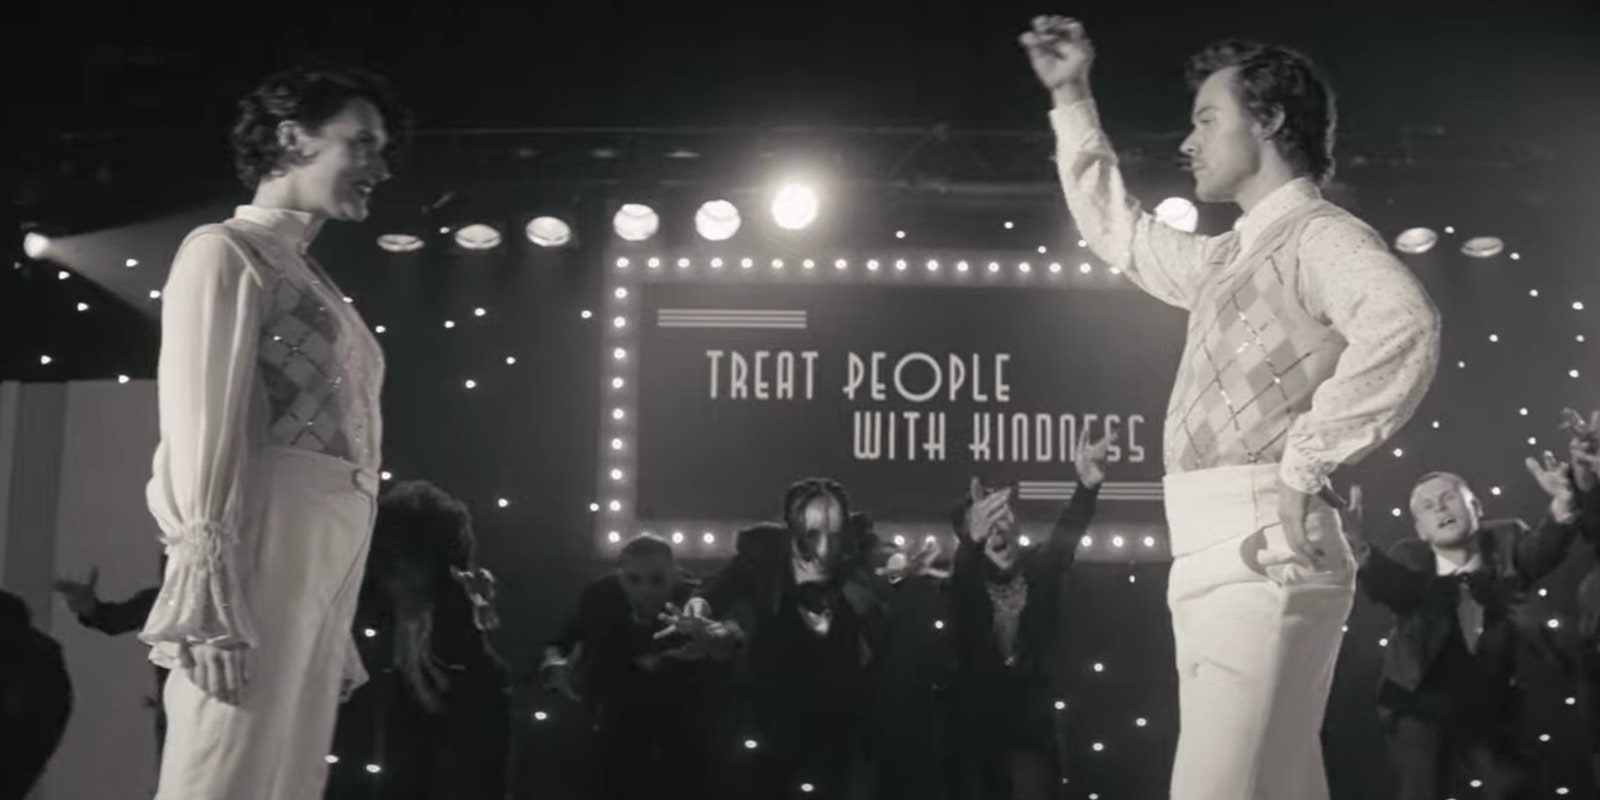 Фиби Уоллер Бридж и наряды Gucci – в новом клипе Гарри Стайлза Treat People With Kindness